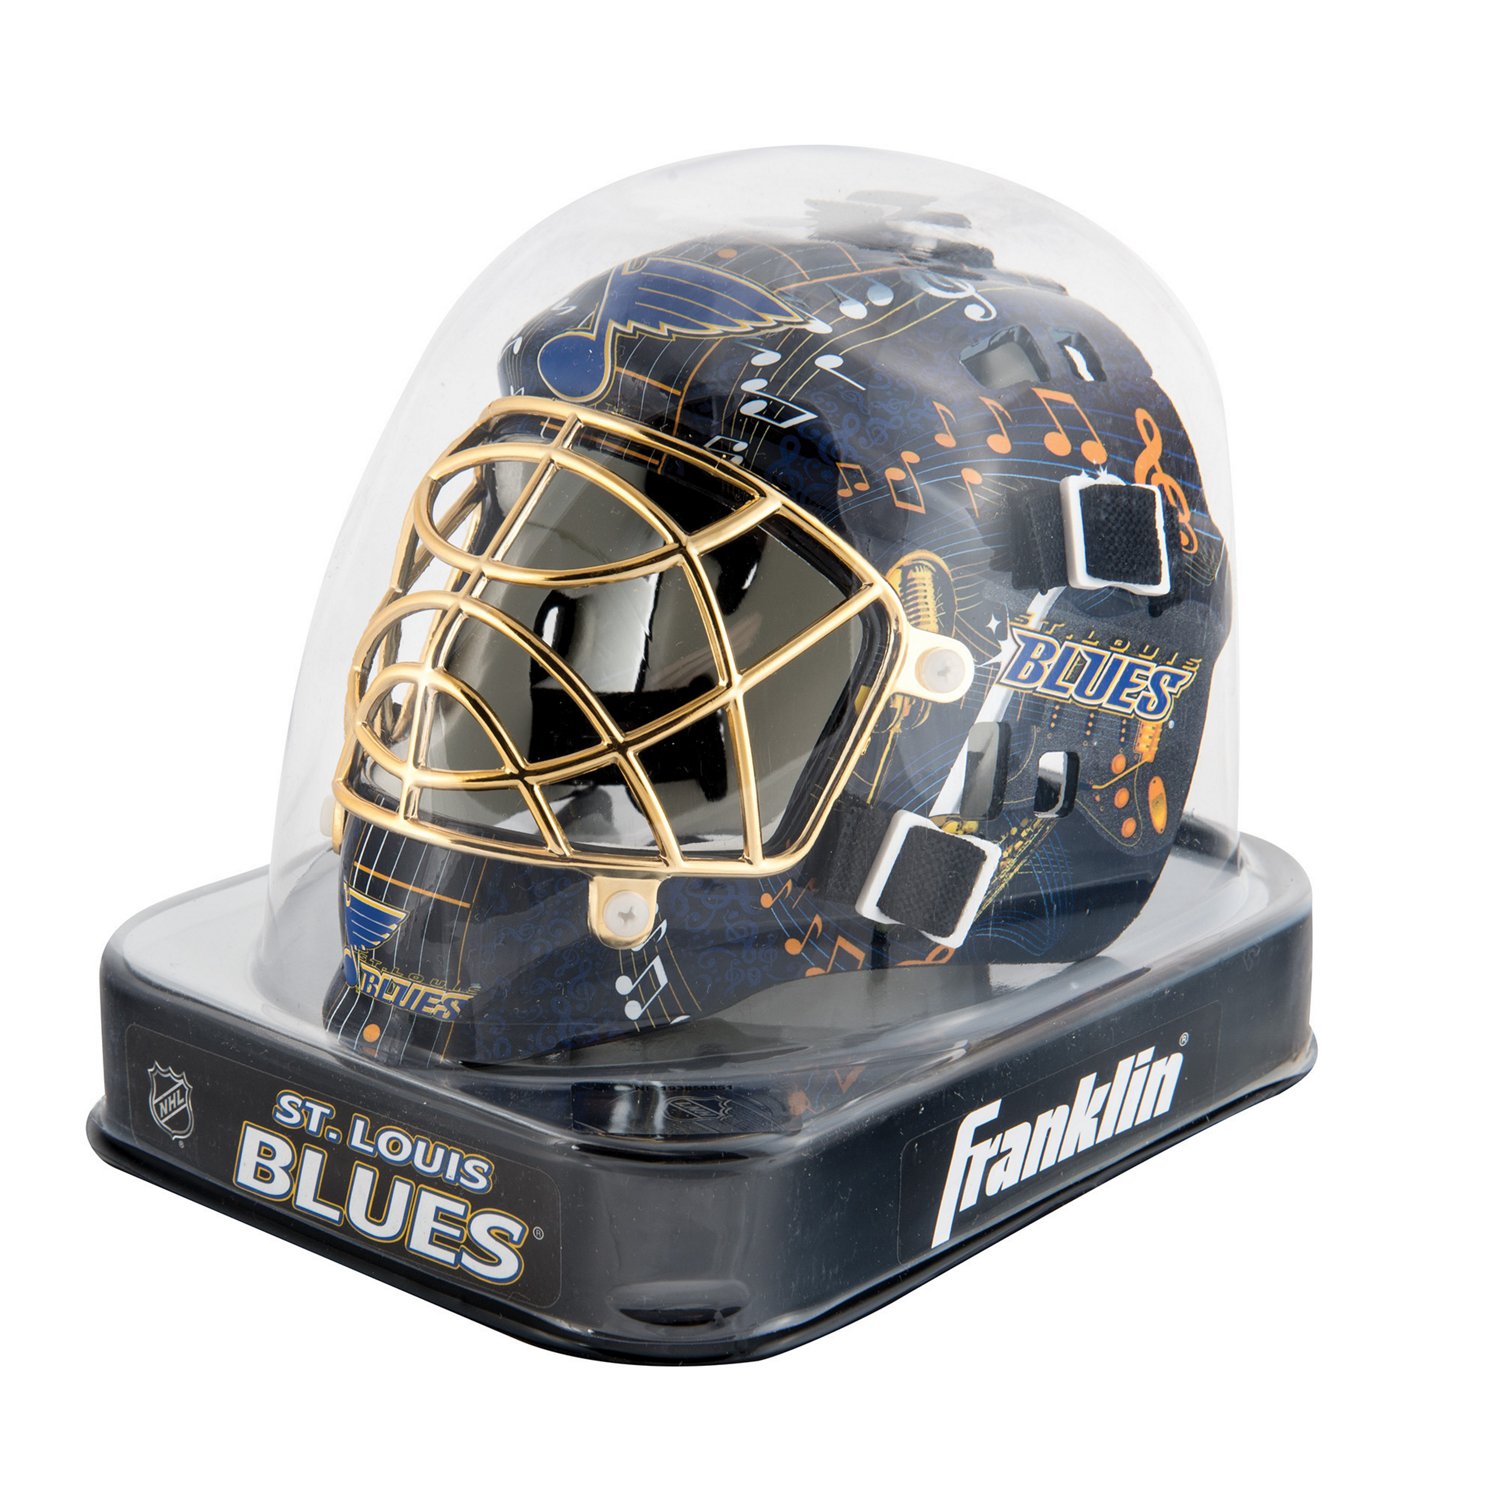 Franklin Sports NHL Mini Goalie Mask (St. Louis Blues)